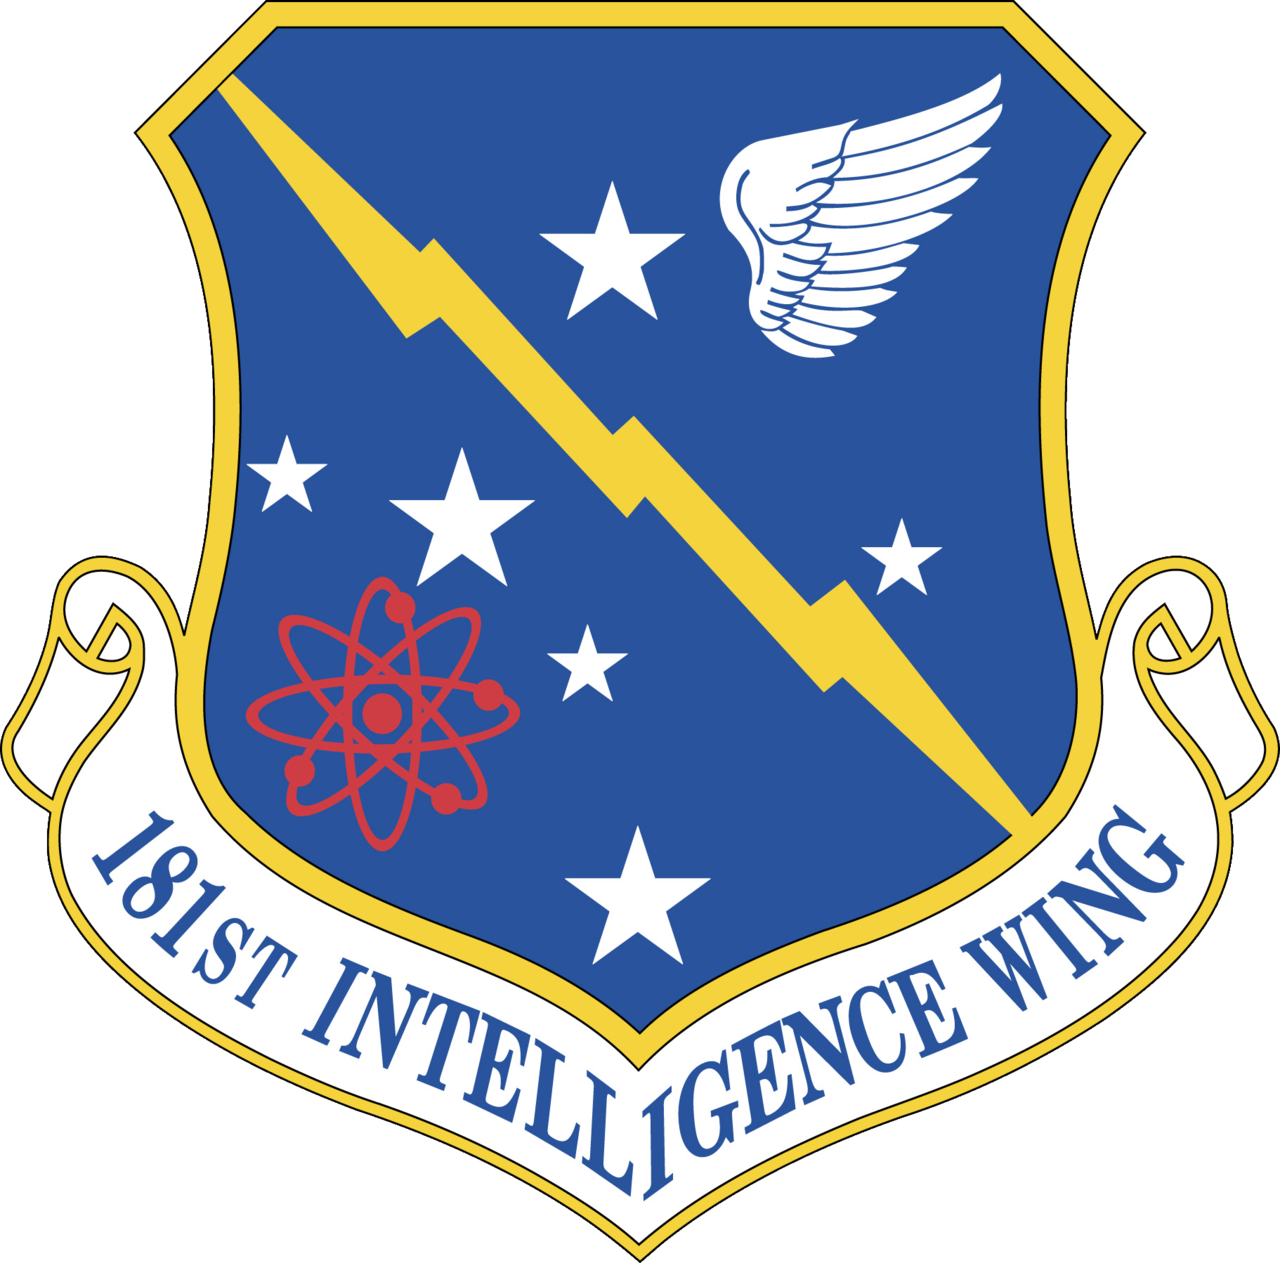 181st Intelligence Wing